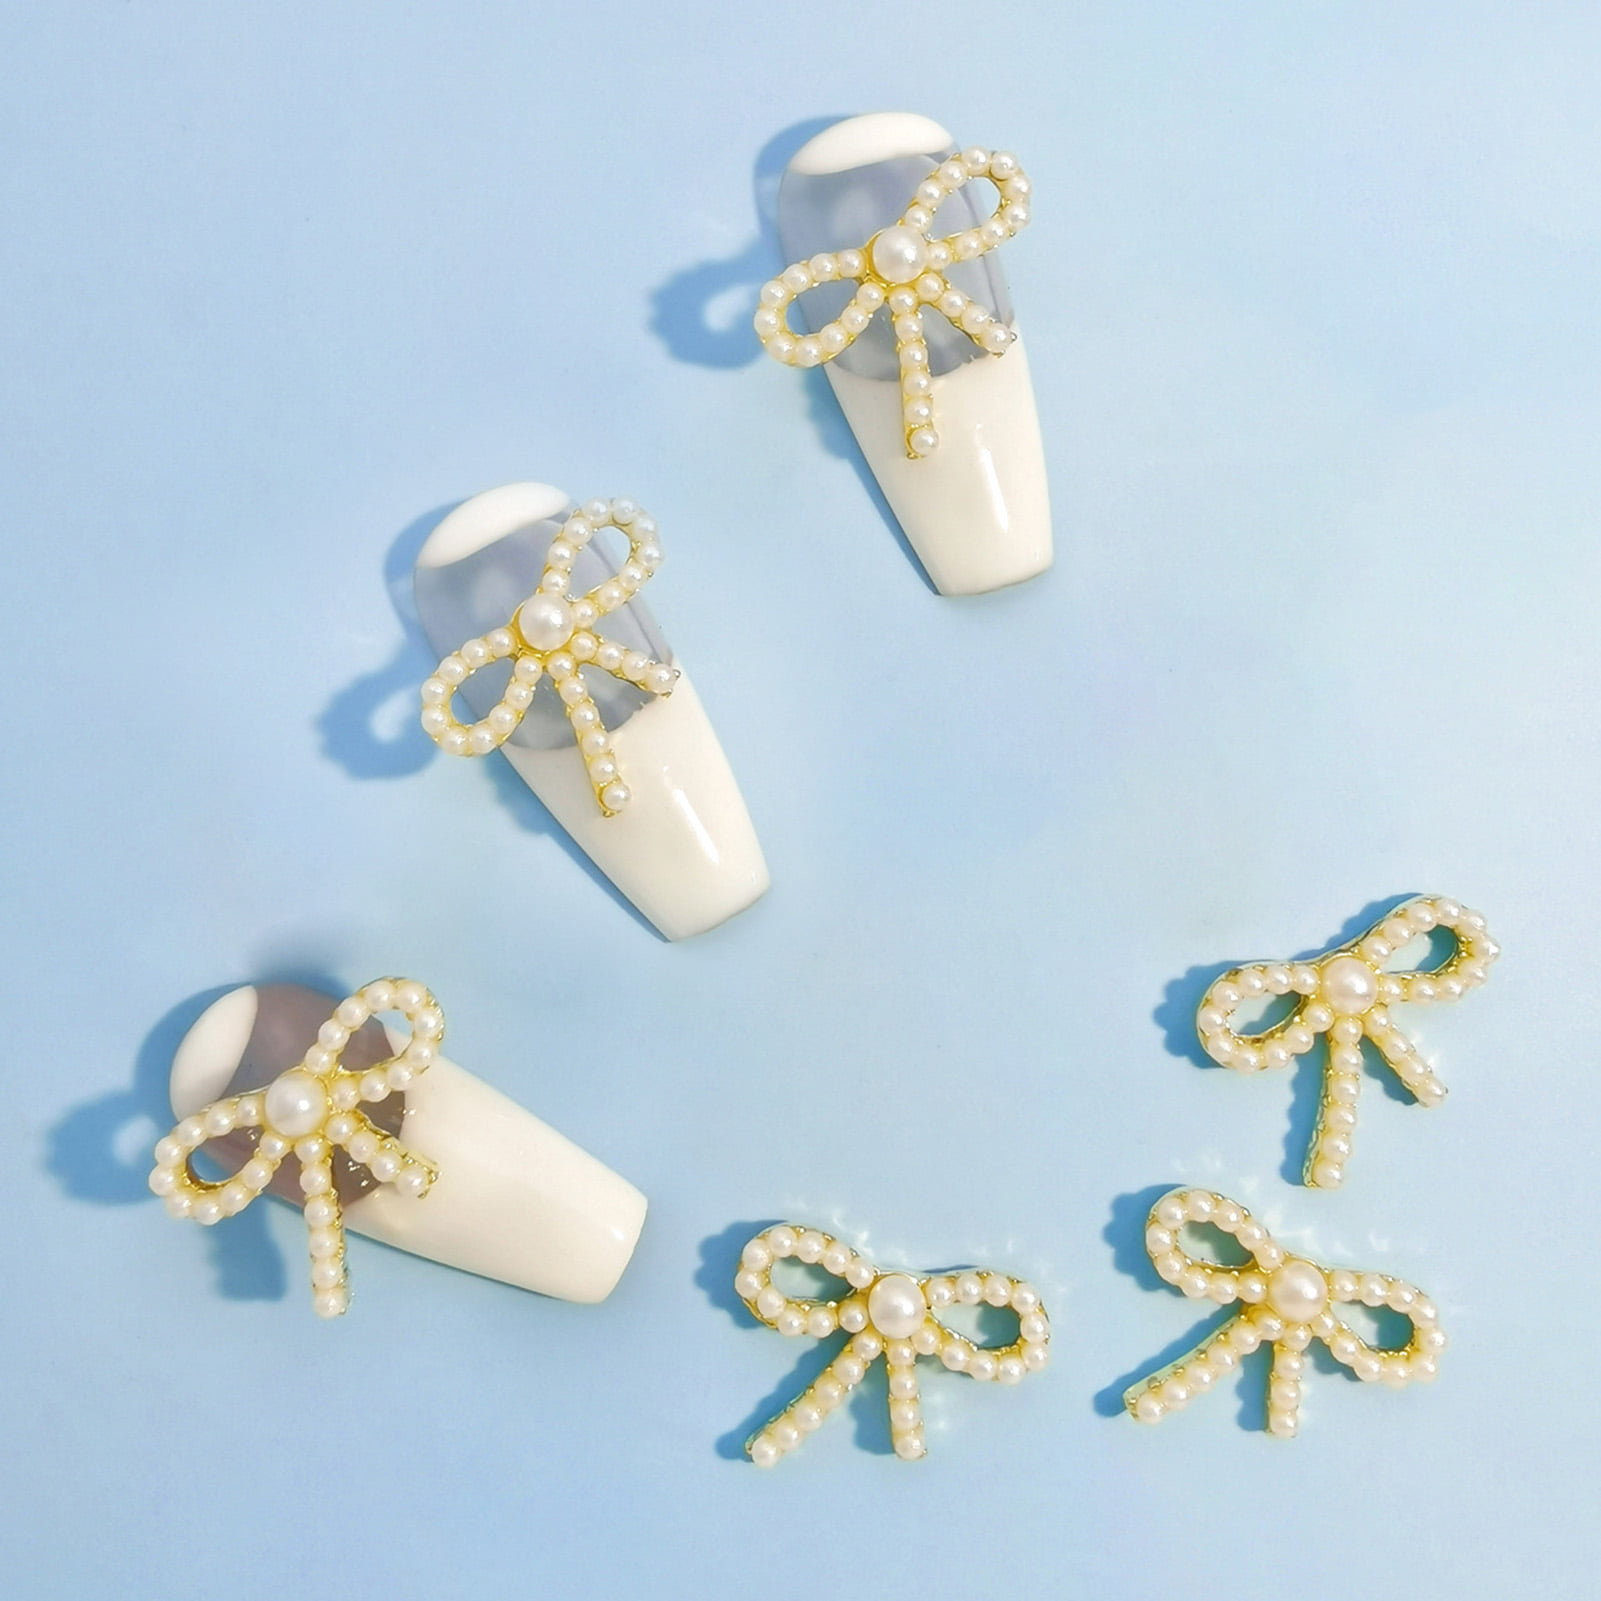 10pcs 3D Kawaii Lace Skirt Nail Art Charms Accessories AB Jewelry Pearl  Parts Nail Decorations DIY Fairy Manicure Rhinestones - AliExpress